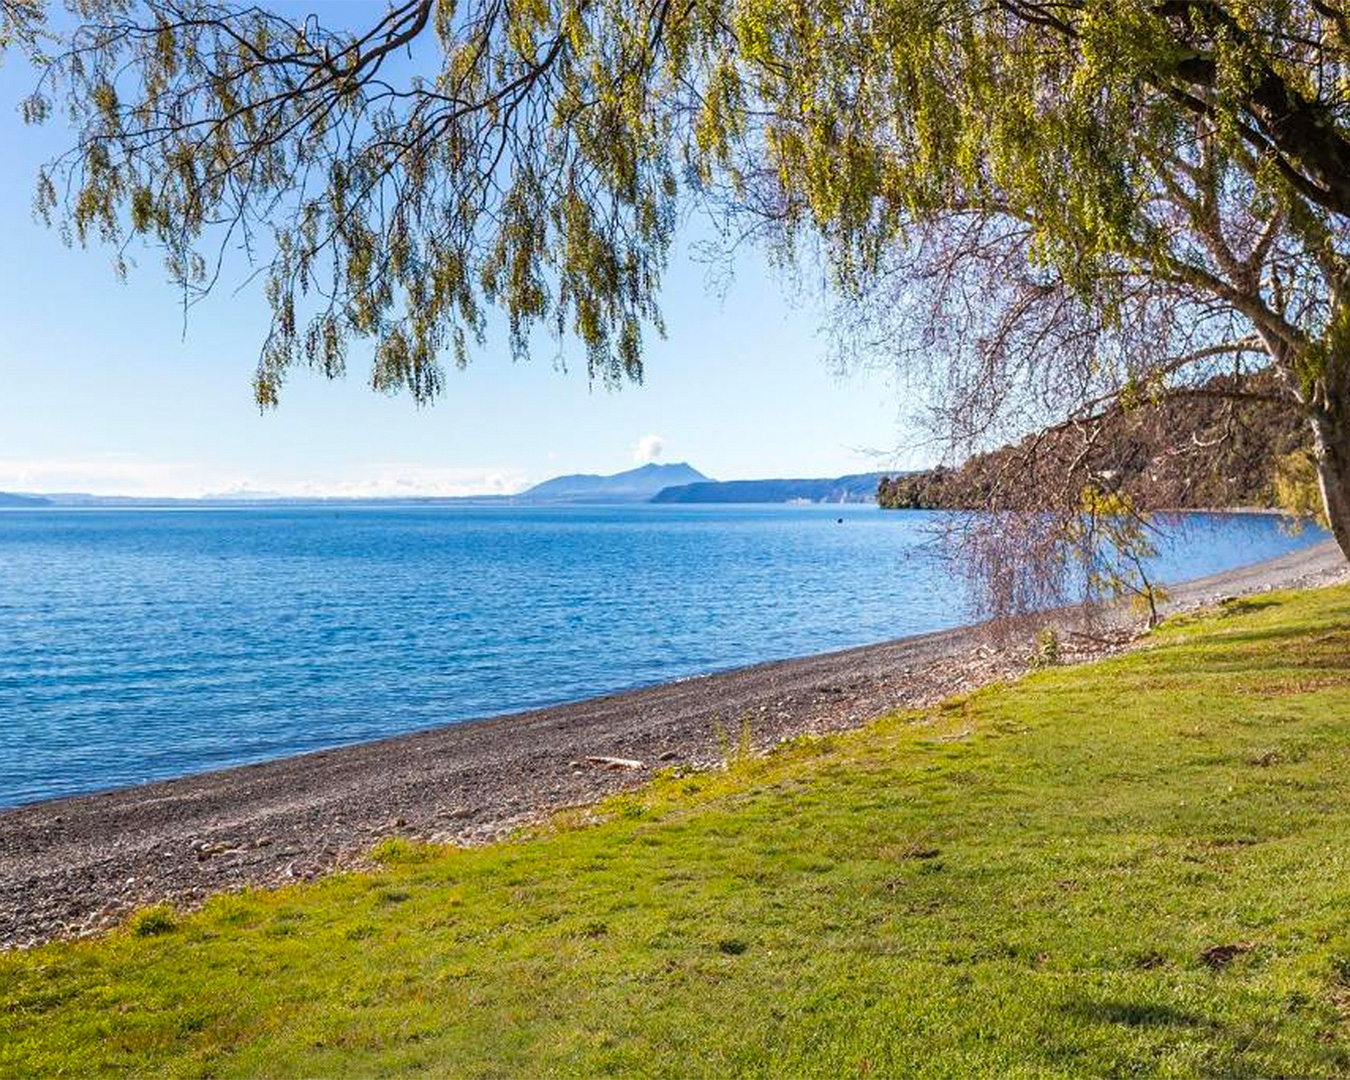 Motutere Bay campground looks serene over Lake Taupo